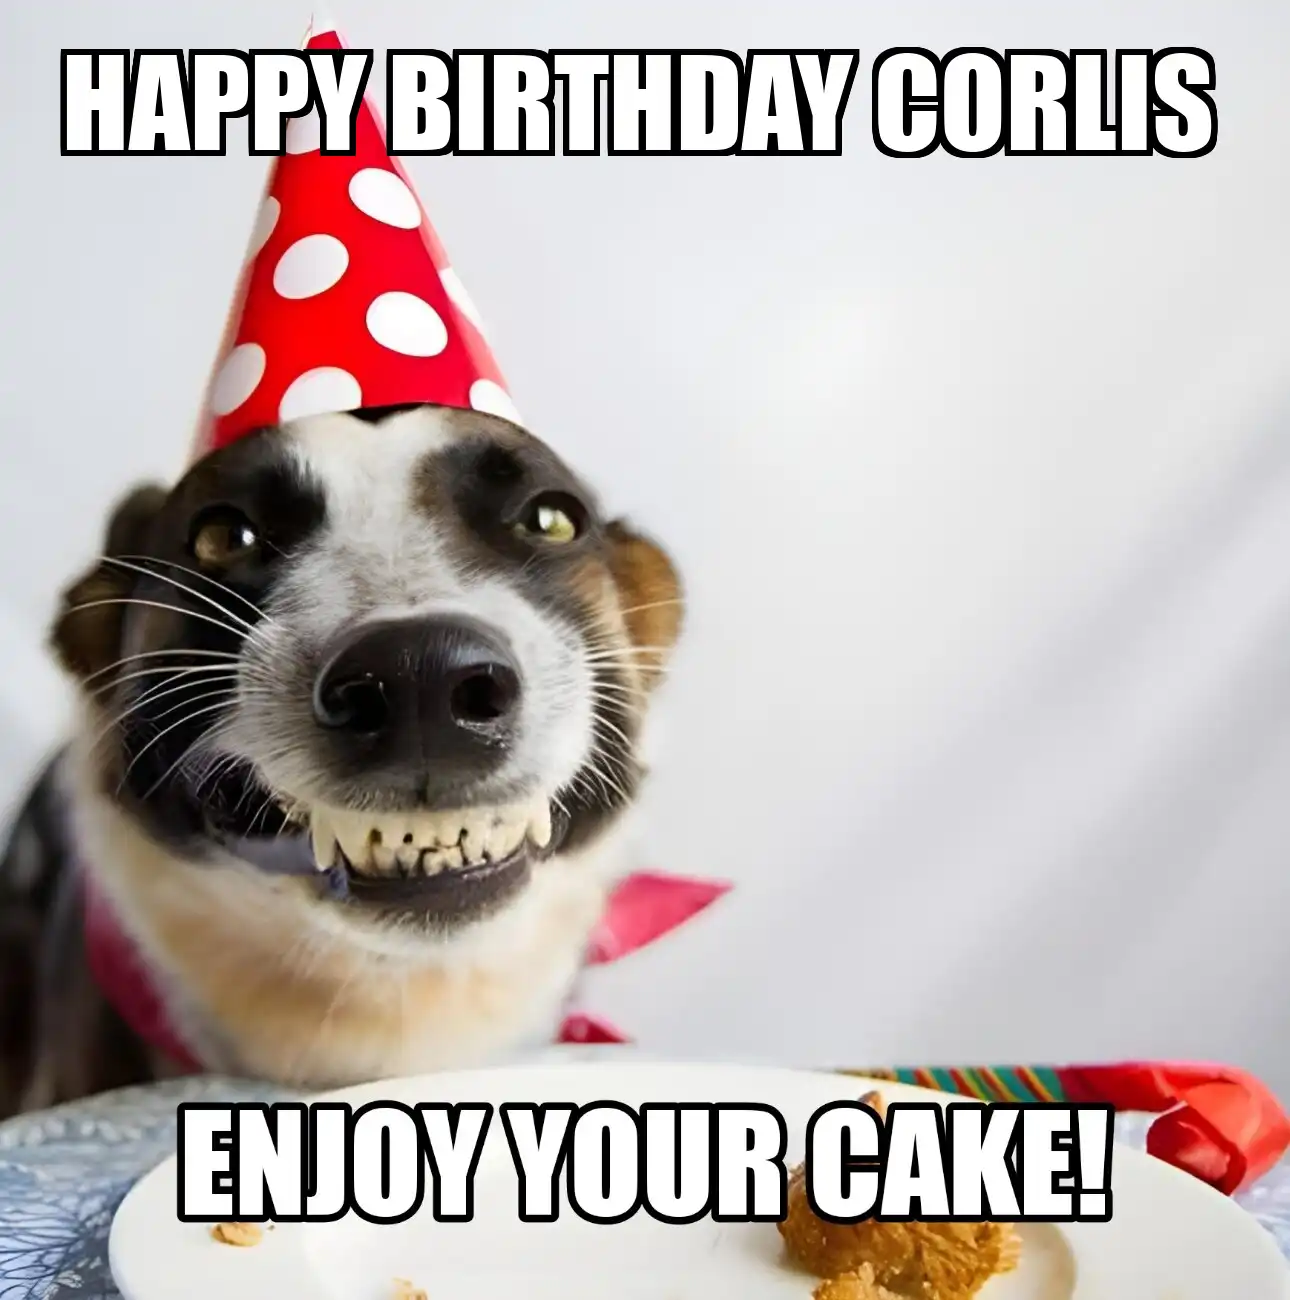 Happy Birthday Corlis Enjoy Your Cake Dog Meme